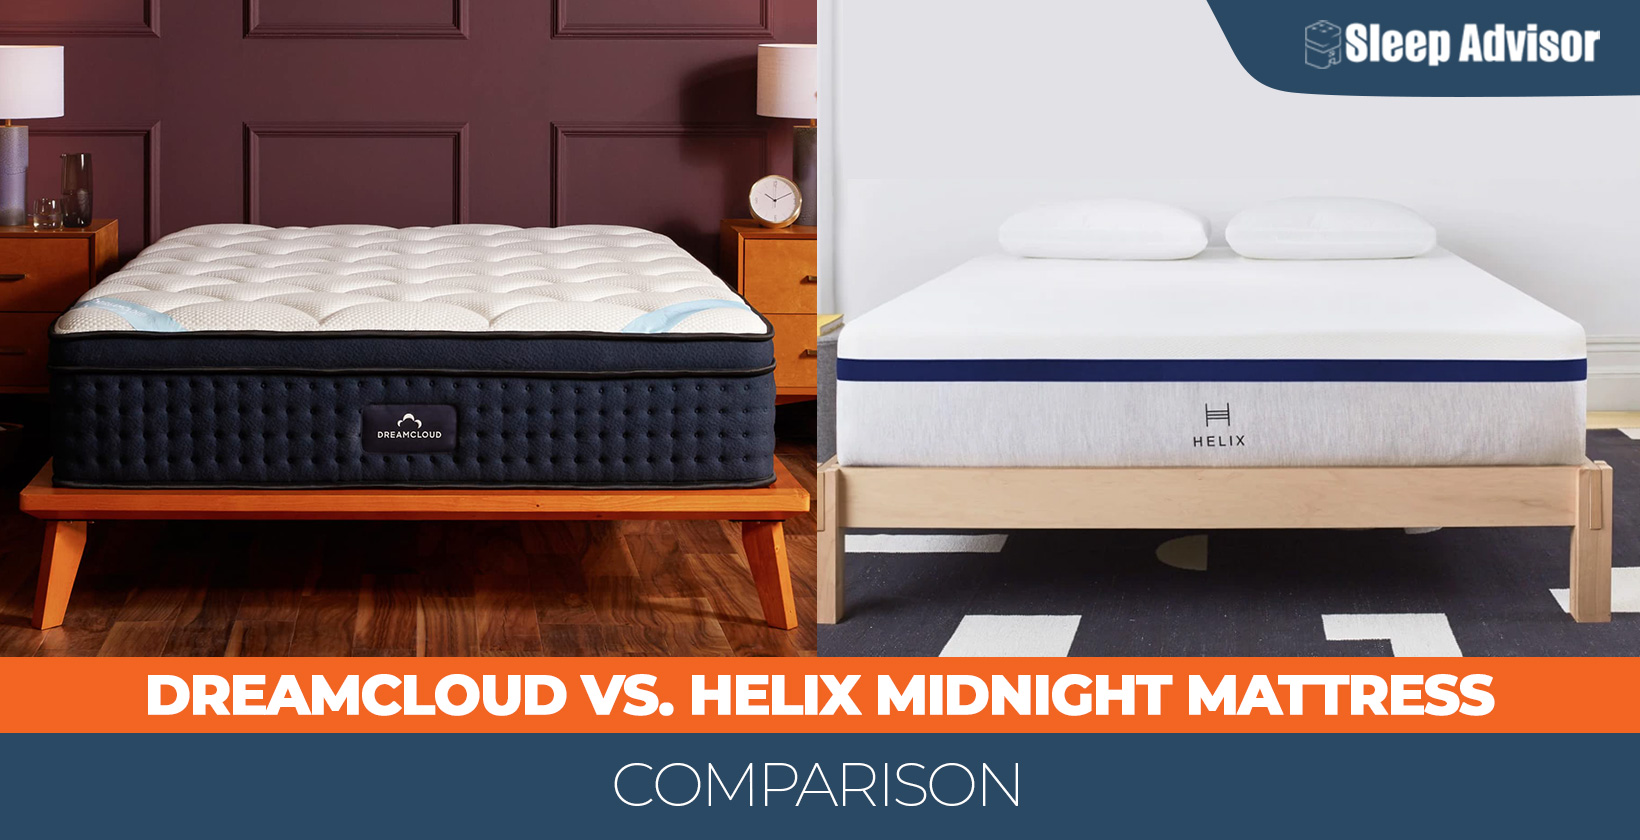 DreamCloud versus Helix Midnight comparison